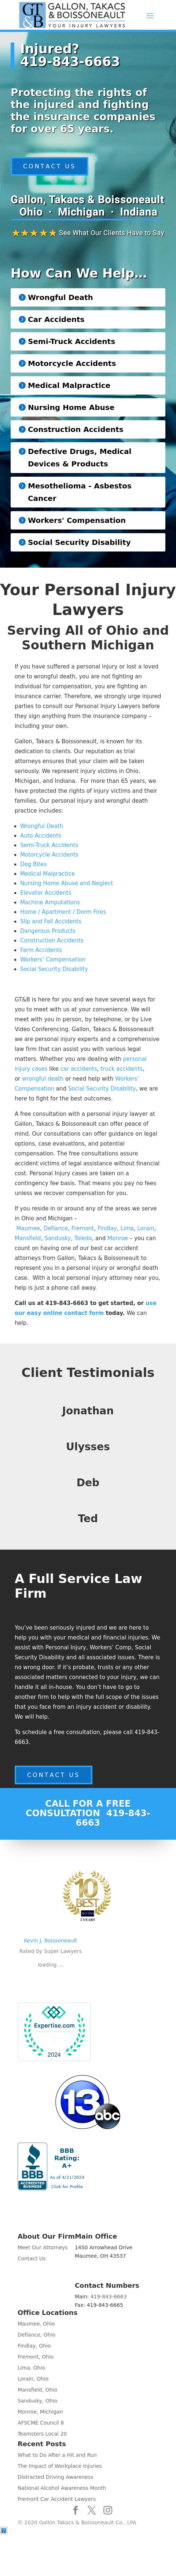 Gallon Takacs Boissoneault & Schaffer Co LPA - Northwood OH Lawyers